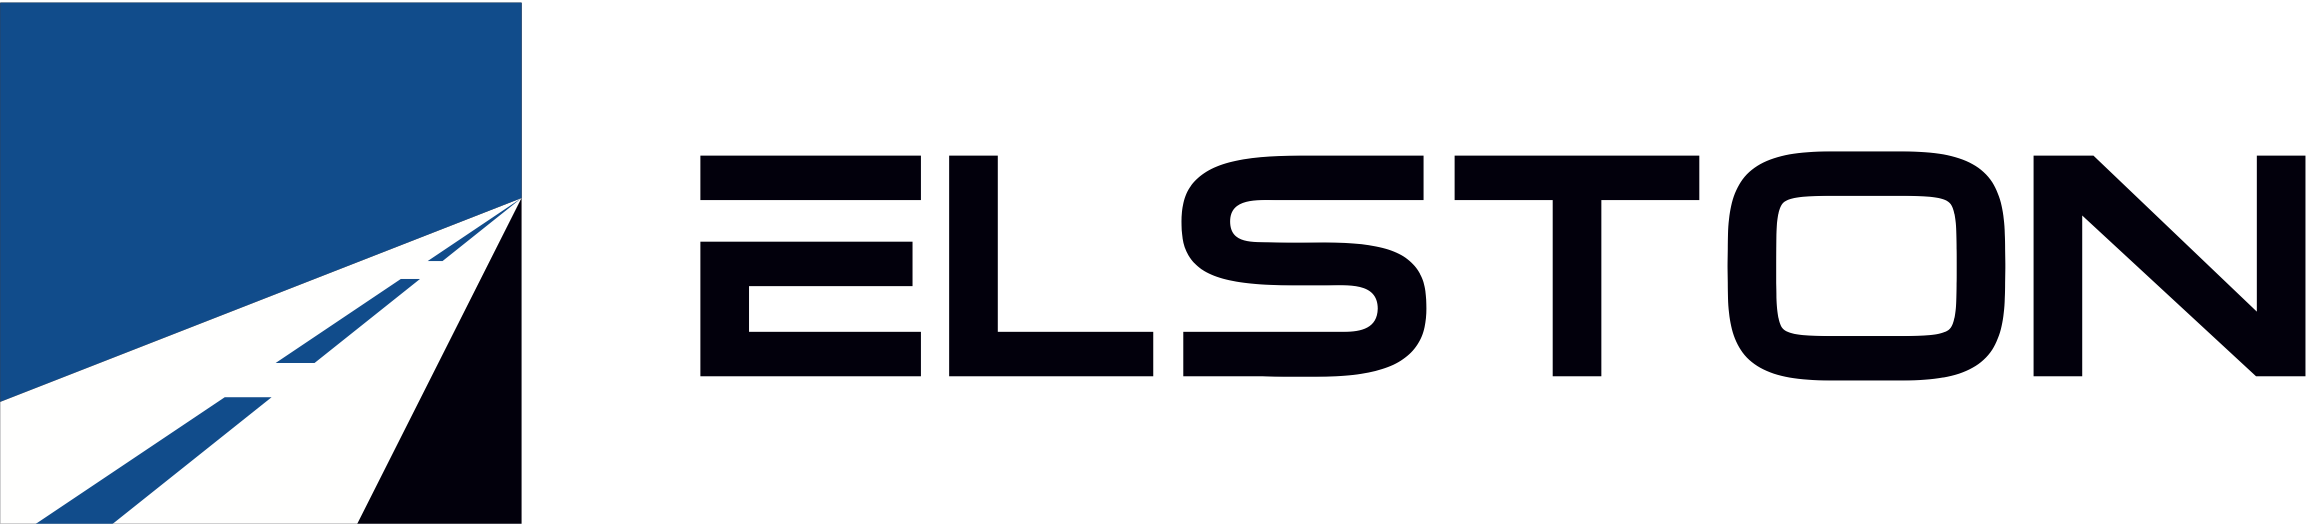 Elston Logo.png